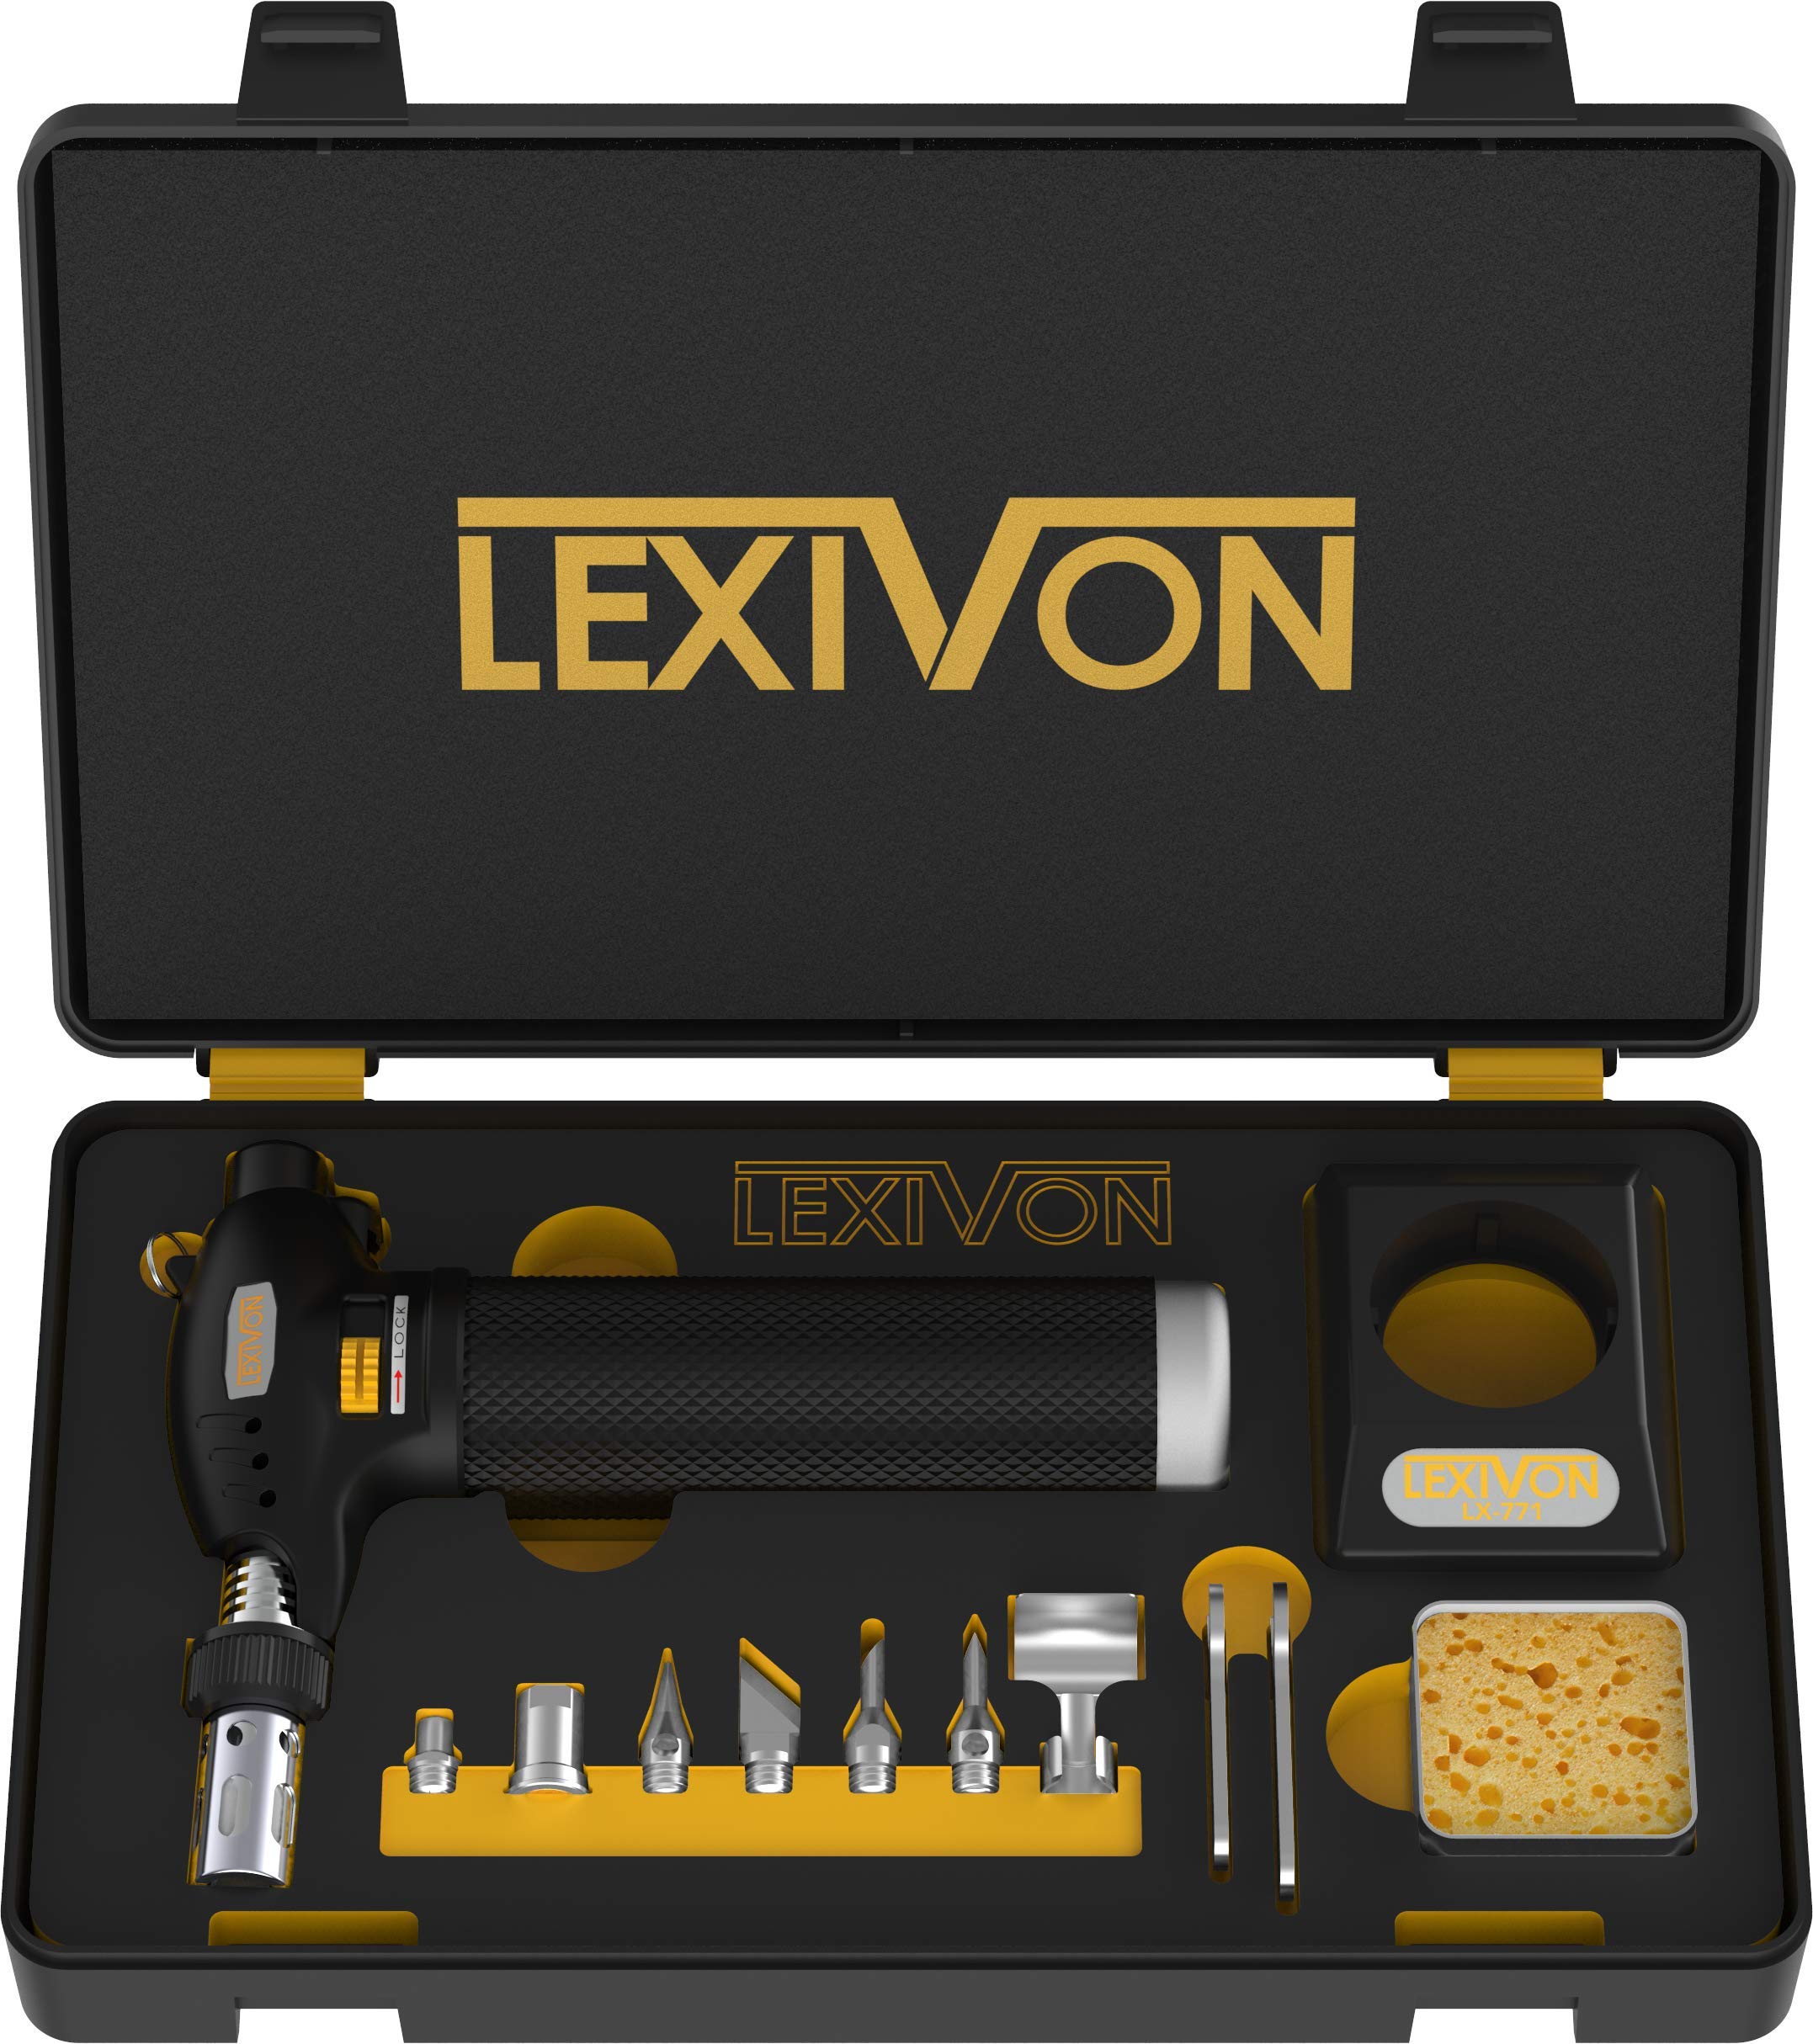 LEXIVON Butane Torch Multi-Function Kit  Premium Self-Igniting Soldering Station with Adjustable Flame  Pro grade 125-Watt Equiv